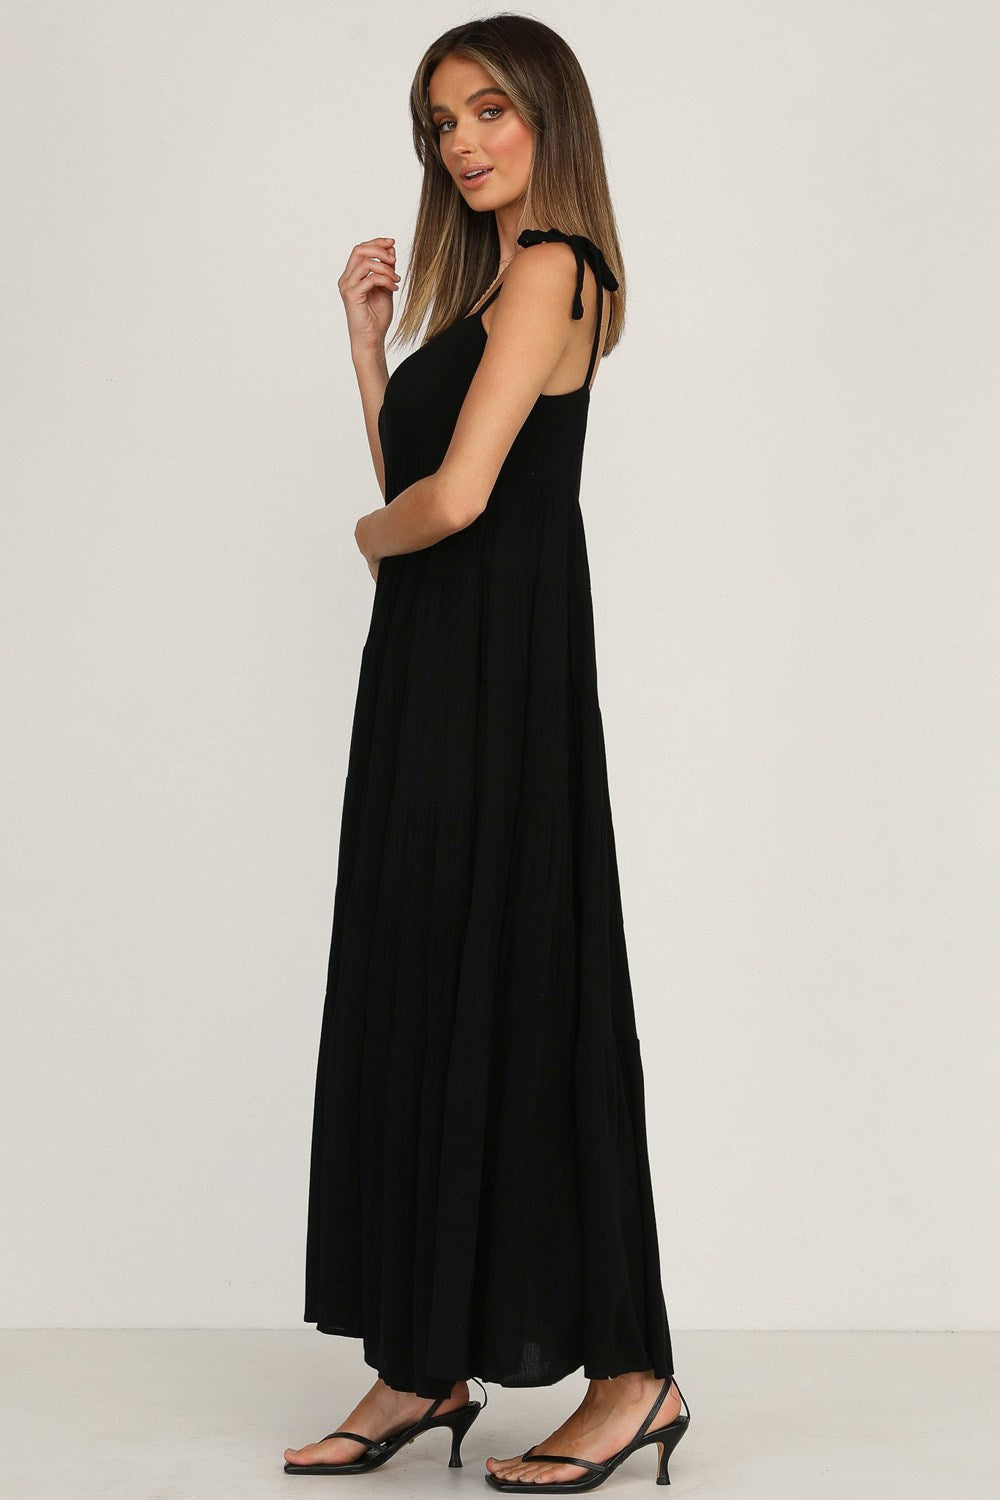 Shop Rayon Dress in Black